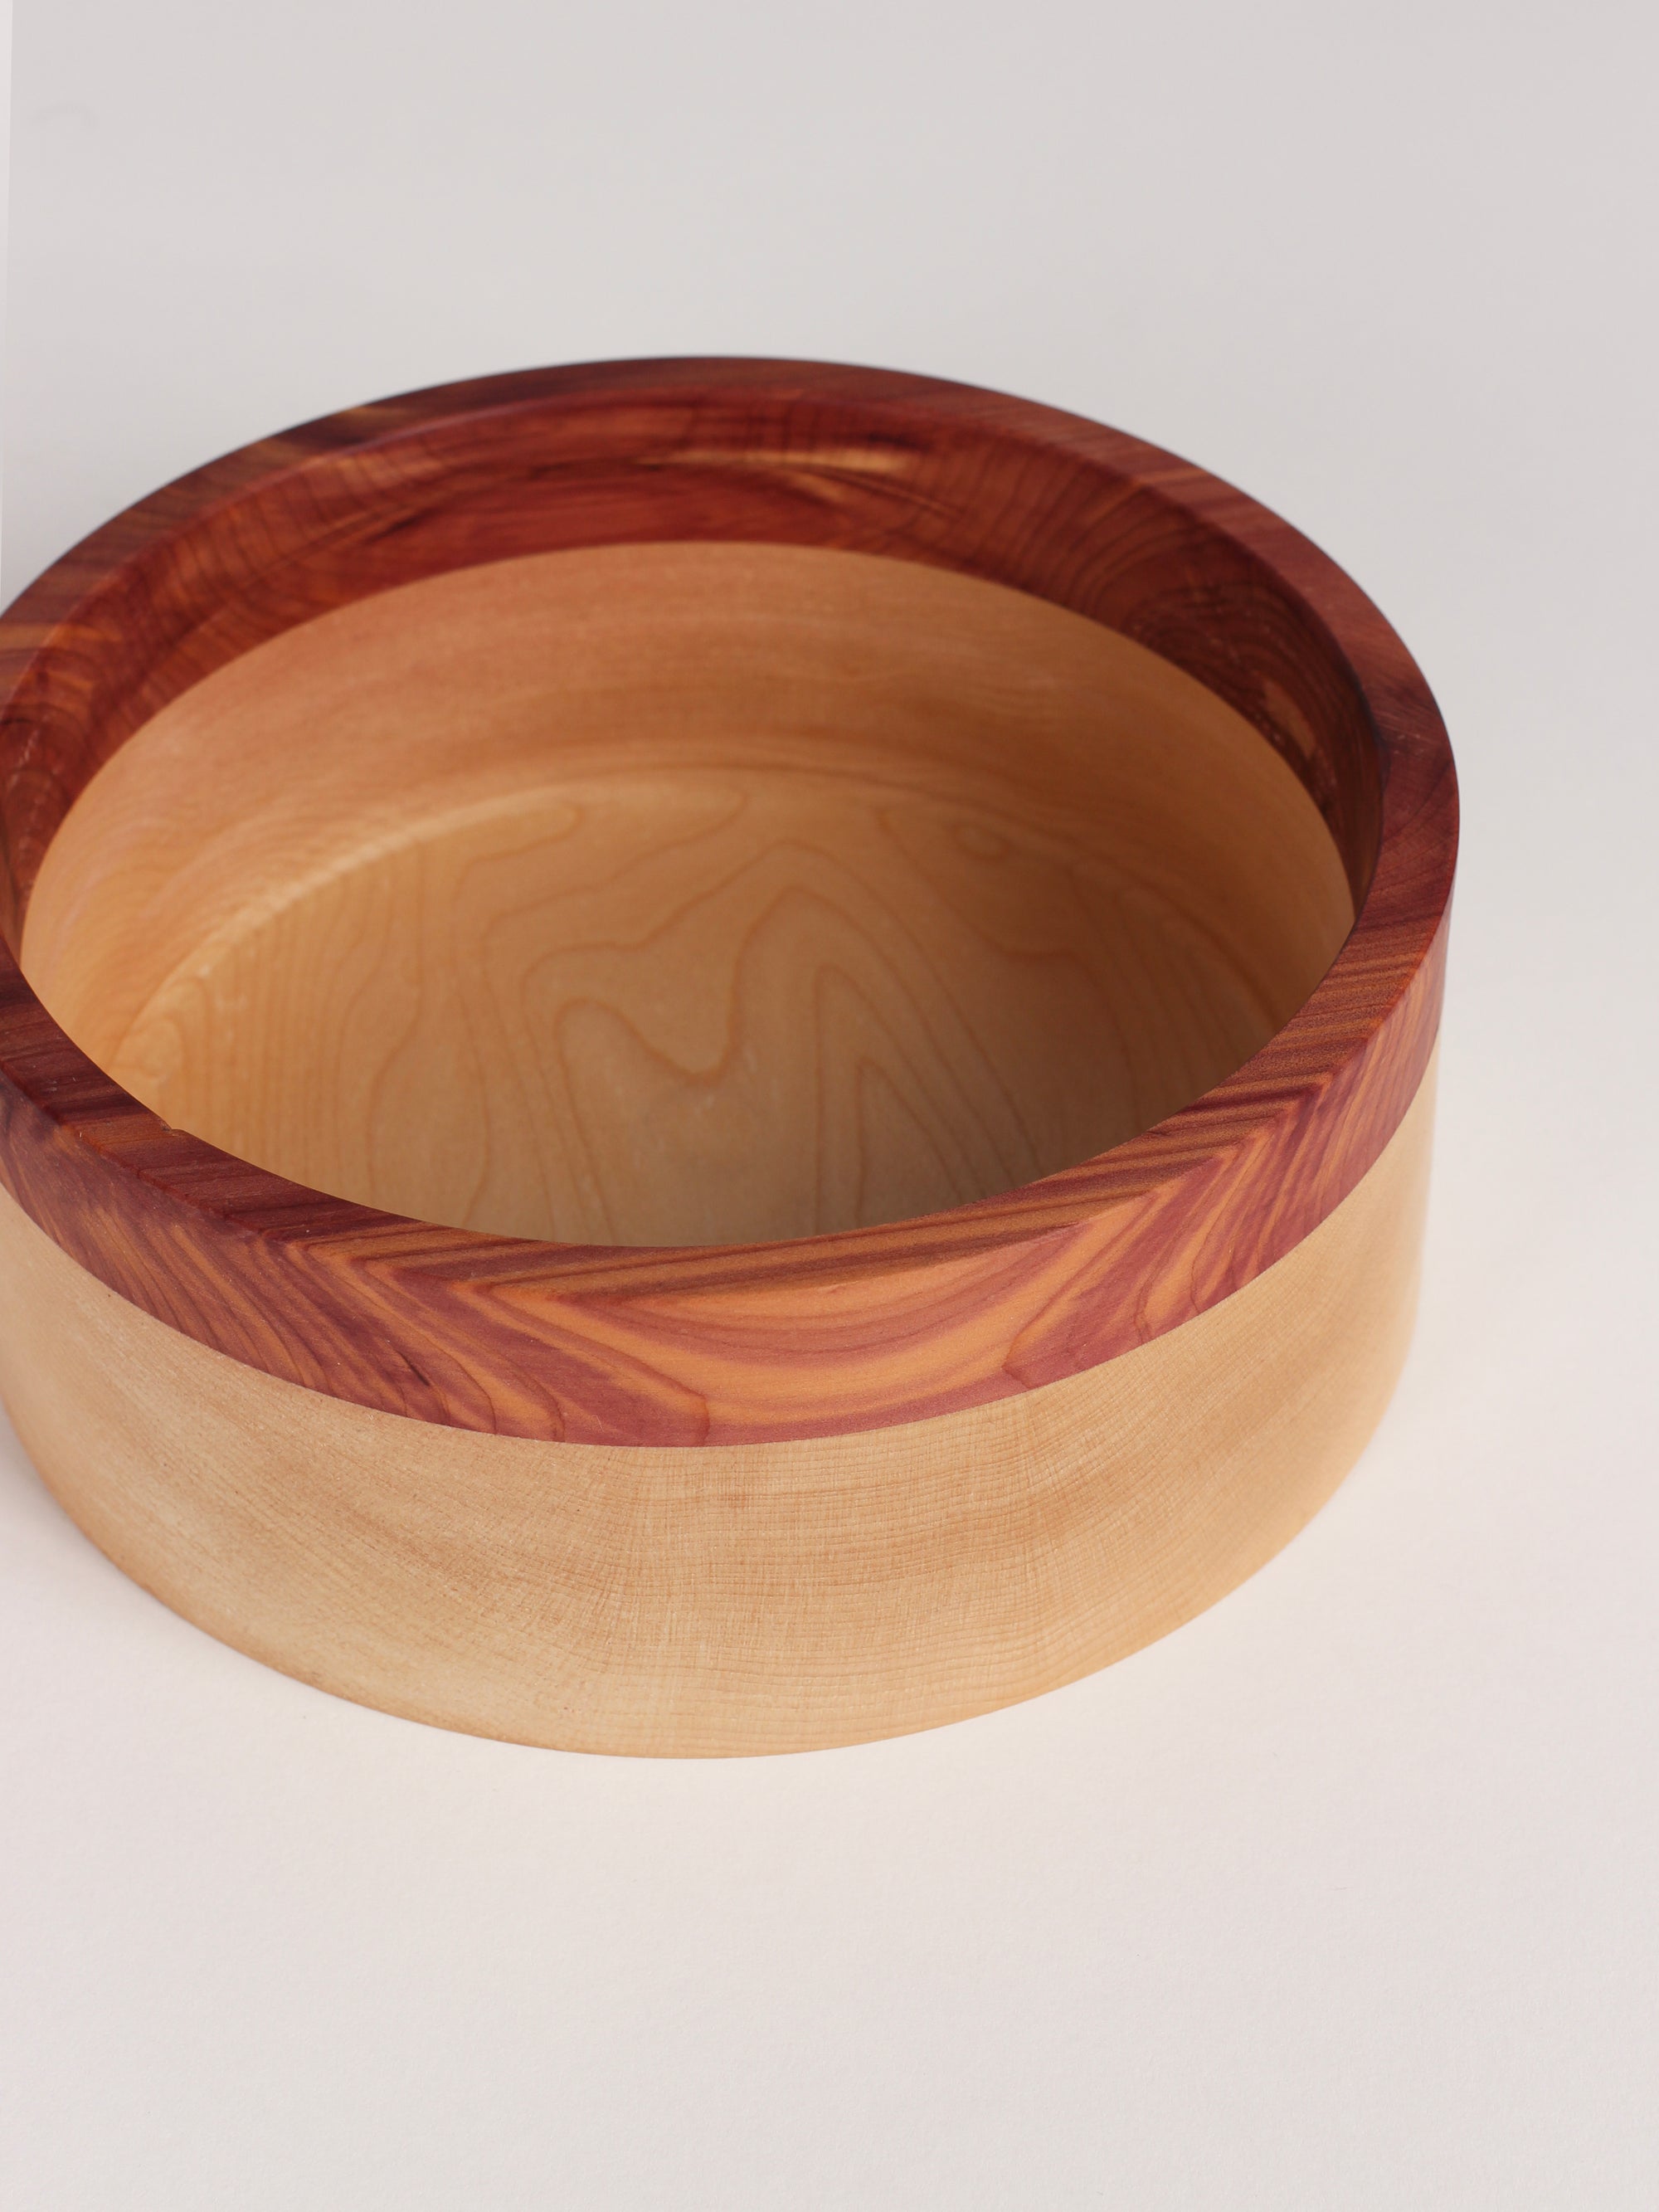 Aromatic Cedar Bowl